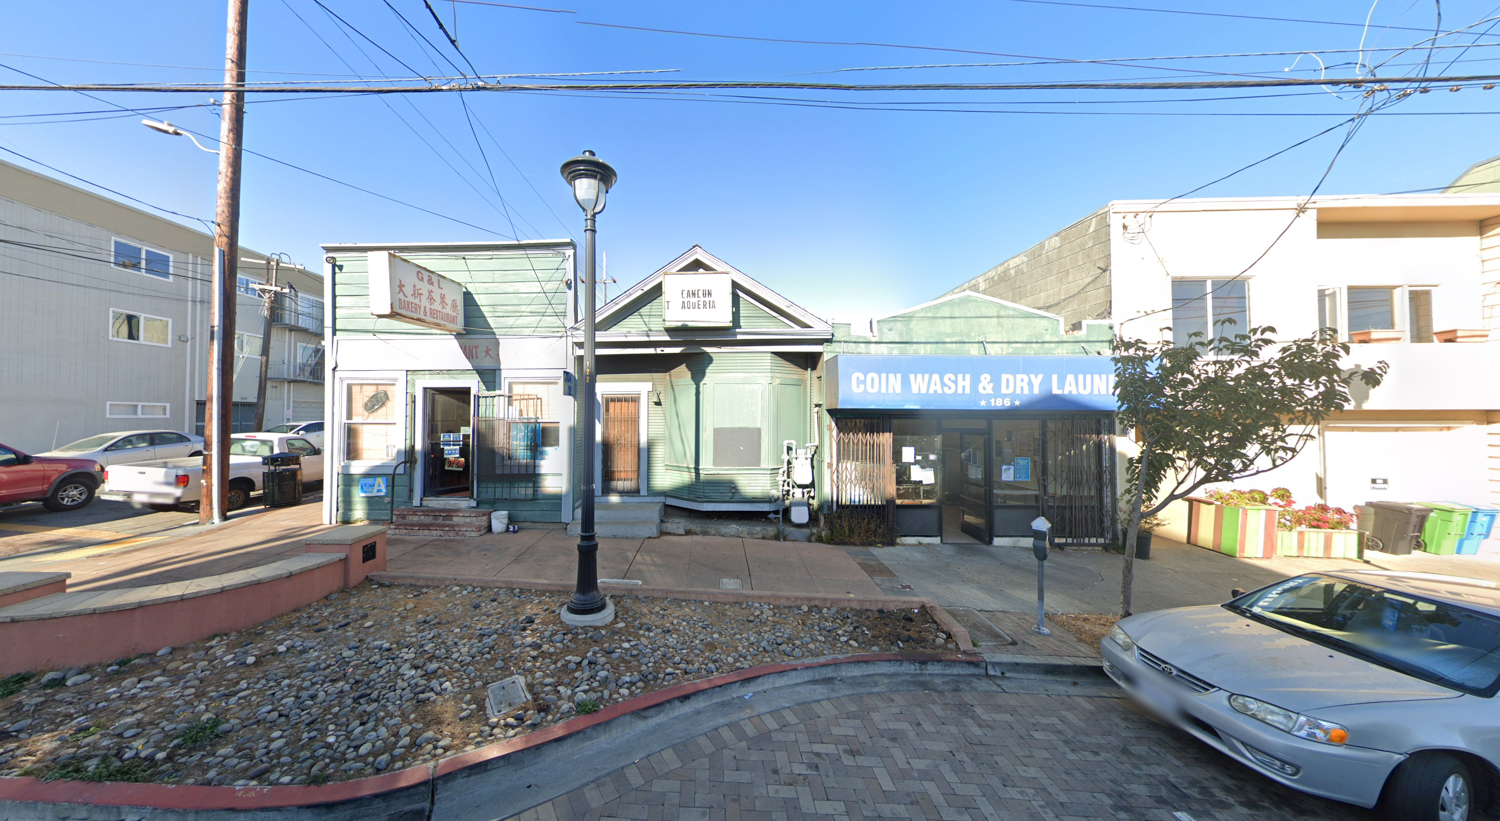 186-198 Leland Avenue, image via Google Street view